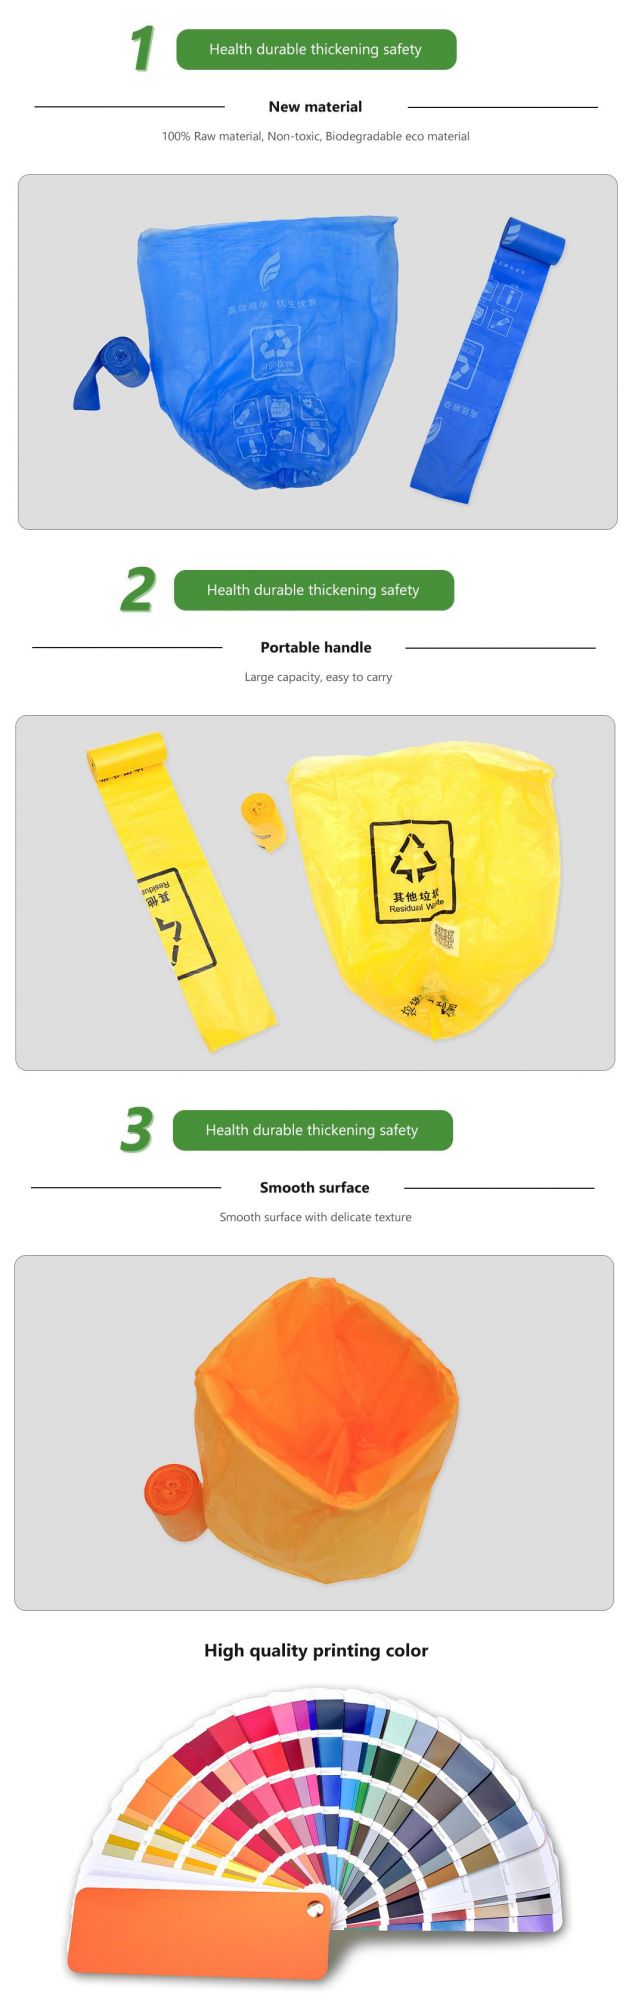 PLA+Pbat/Pbat+Corn Starch Biodegradable Bags, Compostable Bags, Garbage Bags for Home